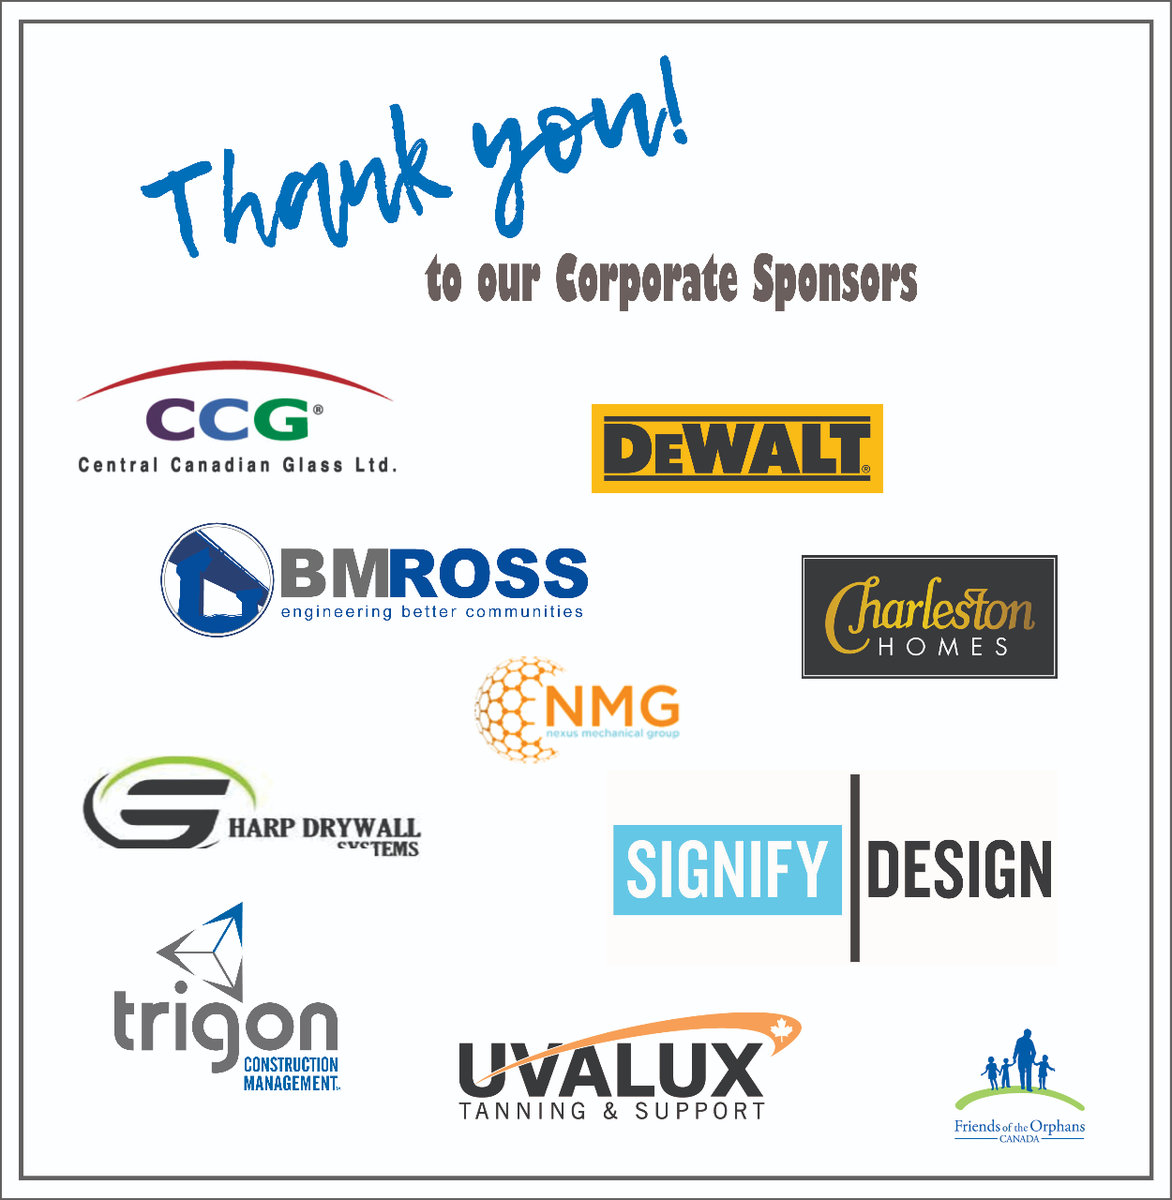 thank you to out sponsors CCG, DeWALT, BMROSS, Charleston Homes, NMG, Sharp Drywall, Signify Design, trigon, Uvalux